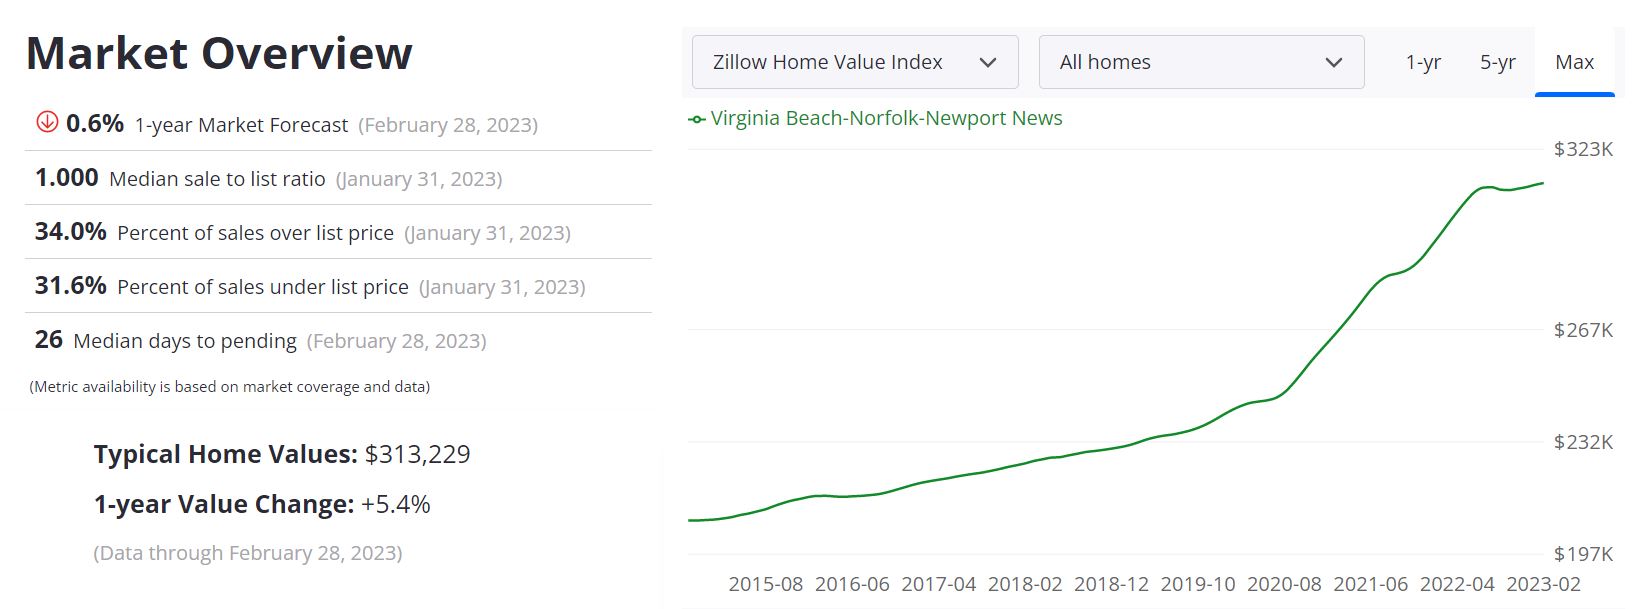 Virginia Beach Housing Market Forecast